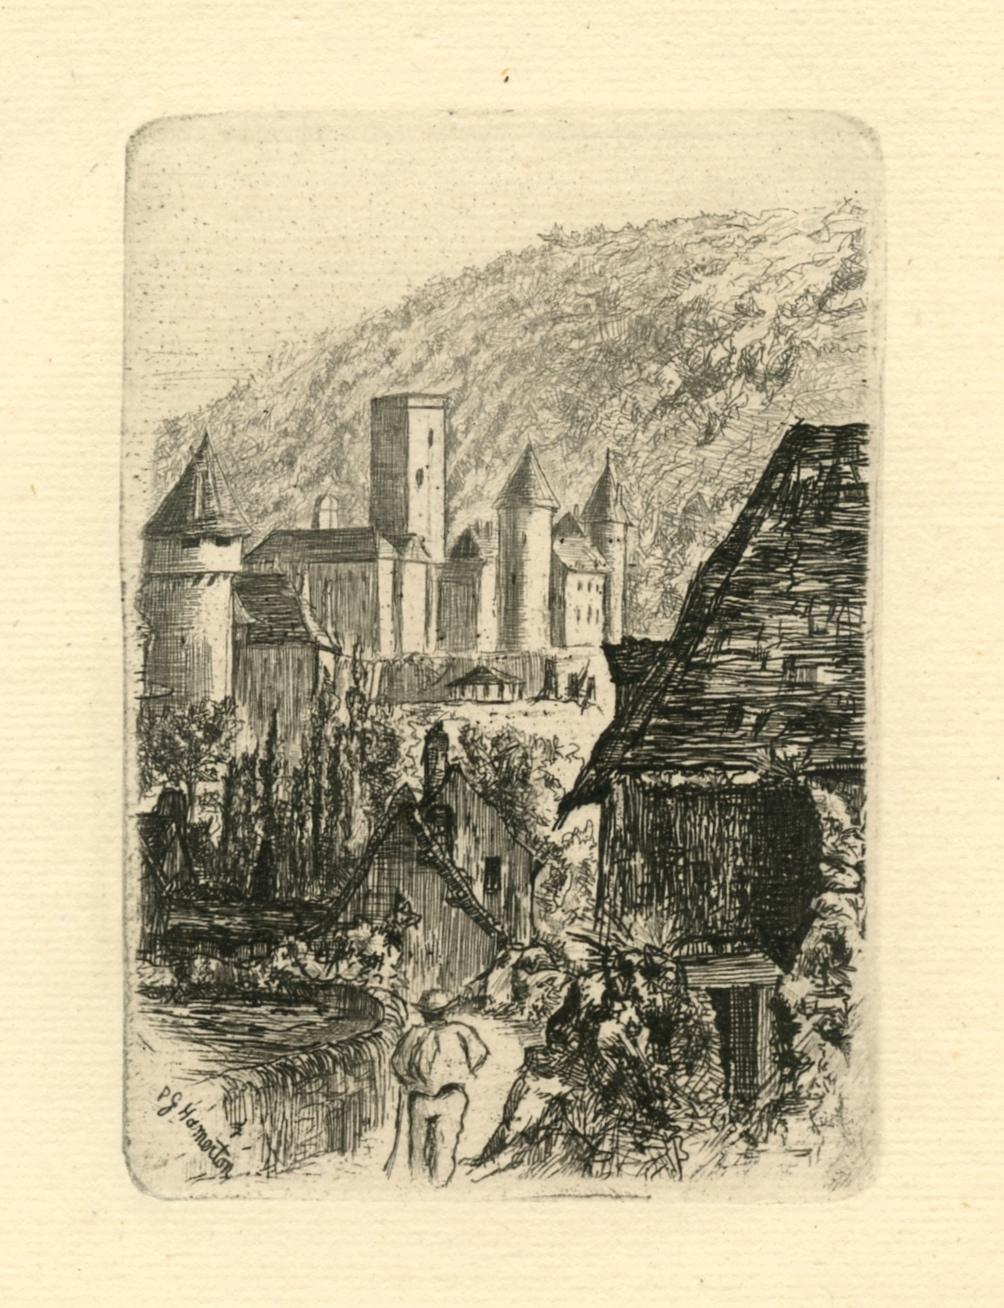 "The Towers of Autun" original etching - Print by Philip Gilbert Hamerton